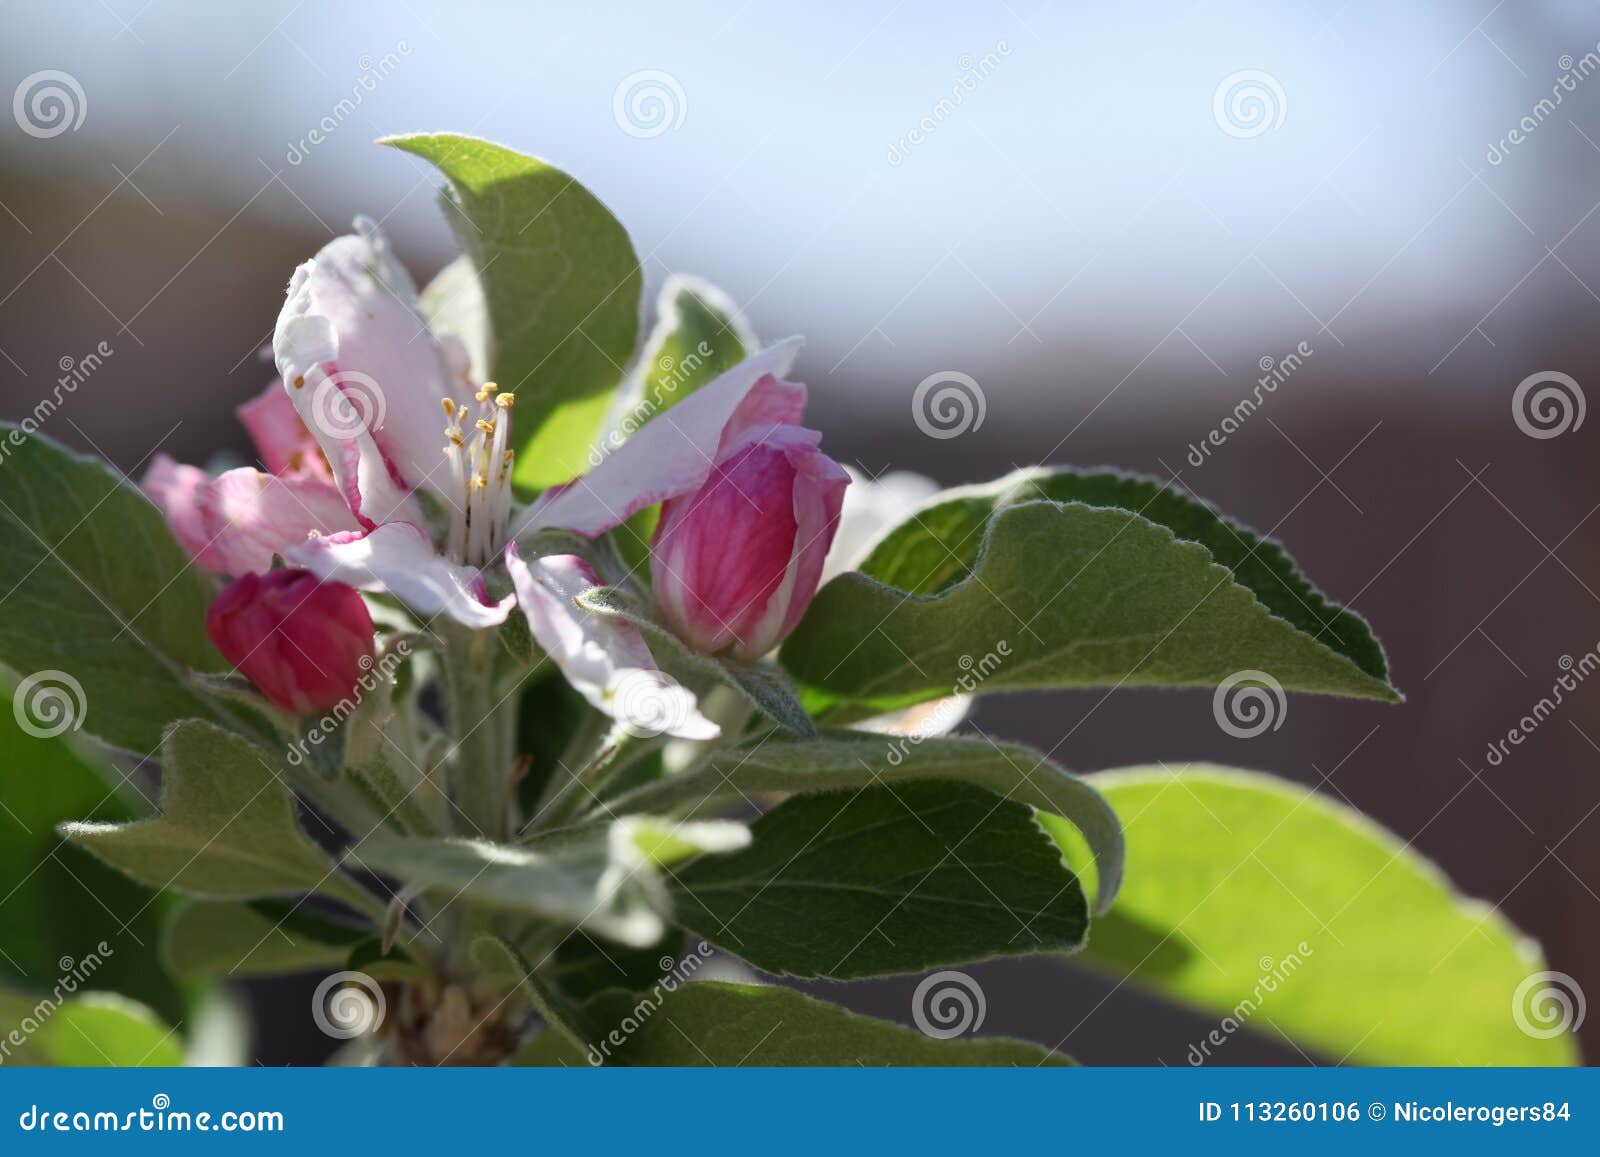 anna apple blossom